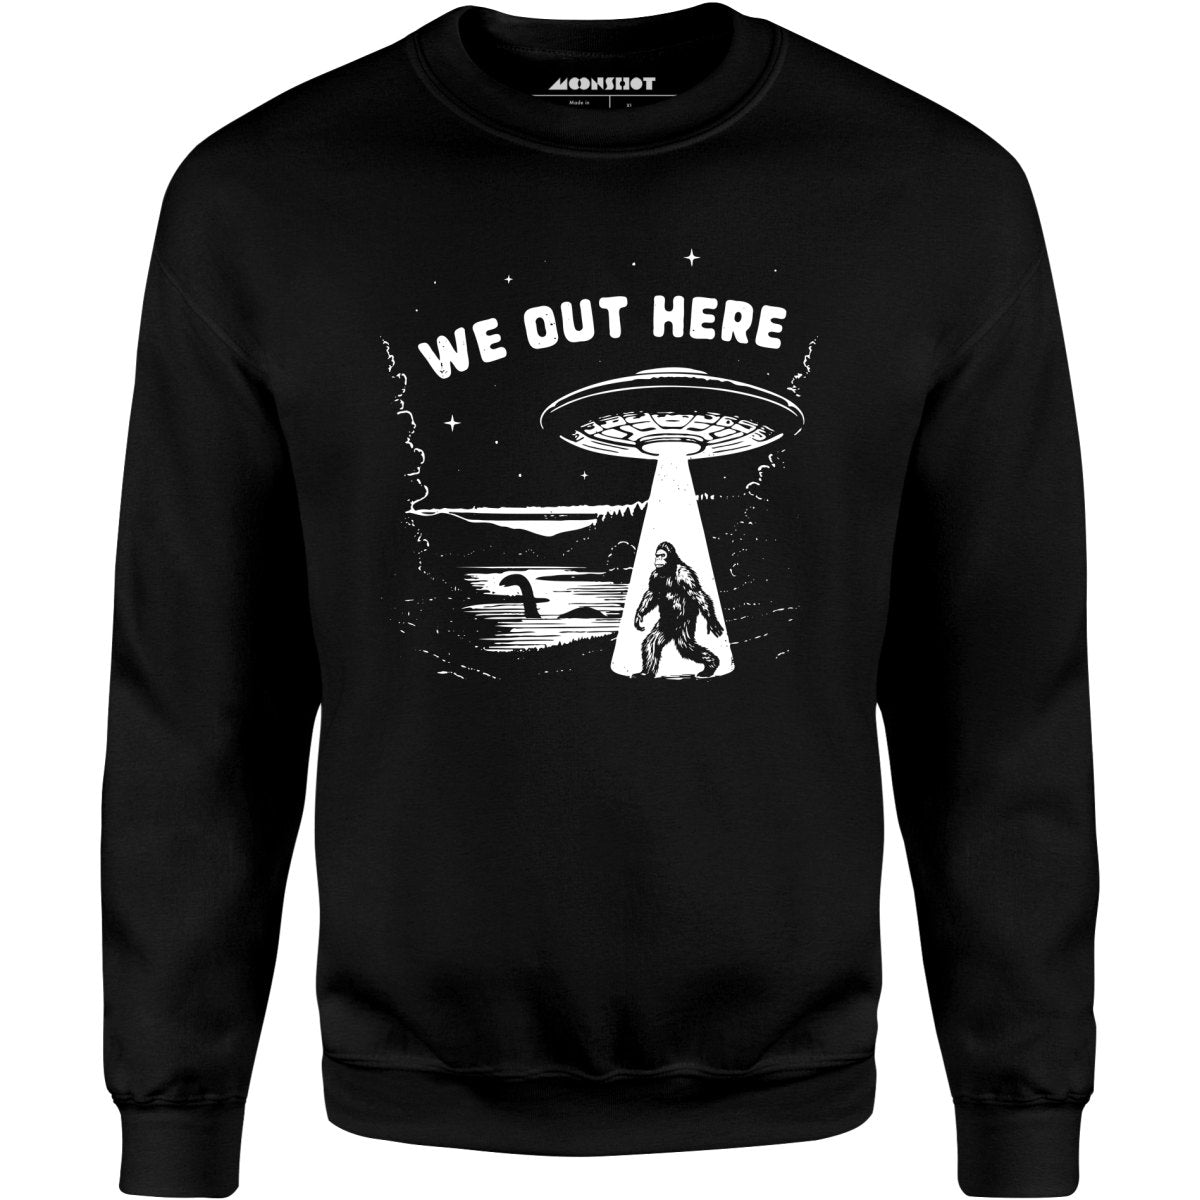 We Out Here - Unisex Sweatshirt